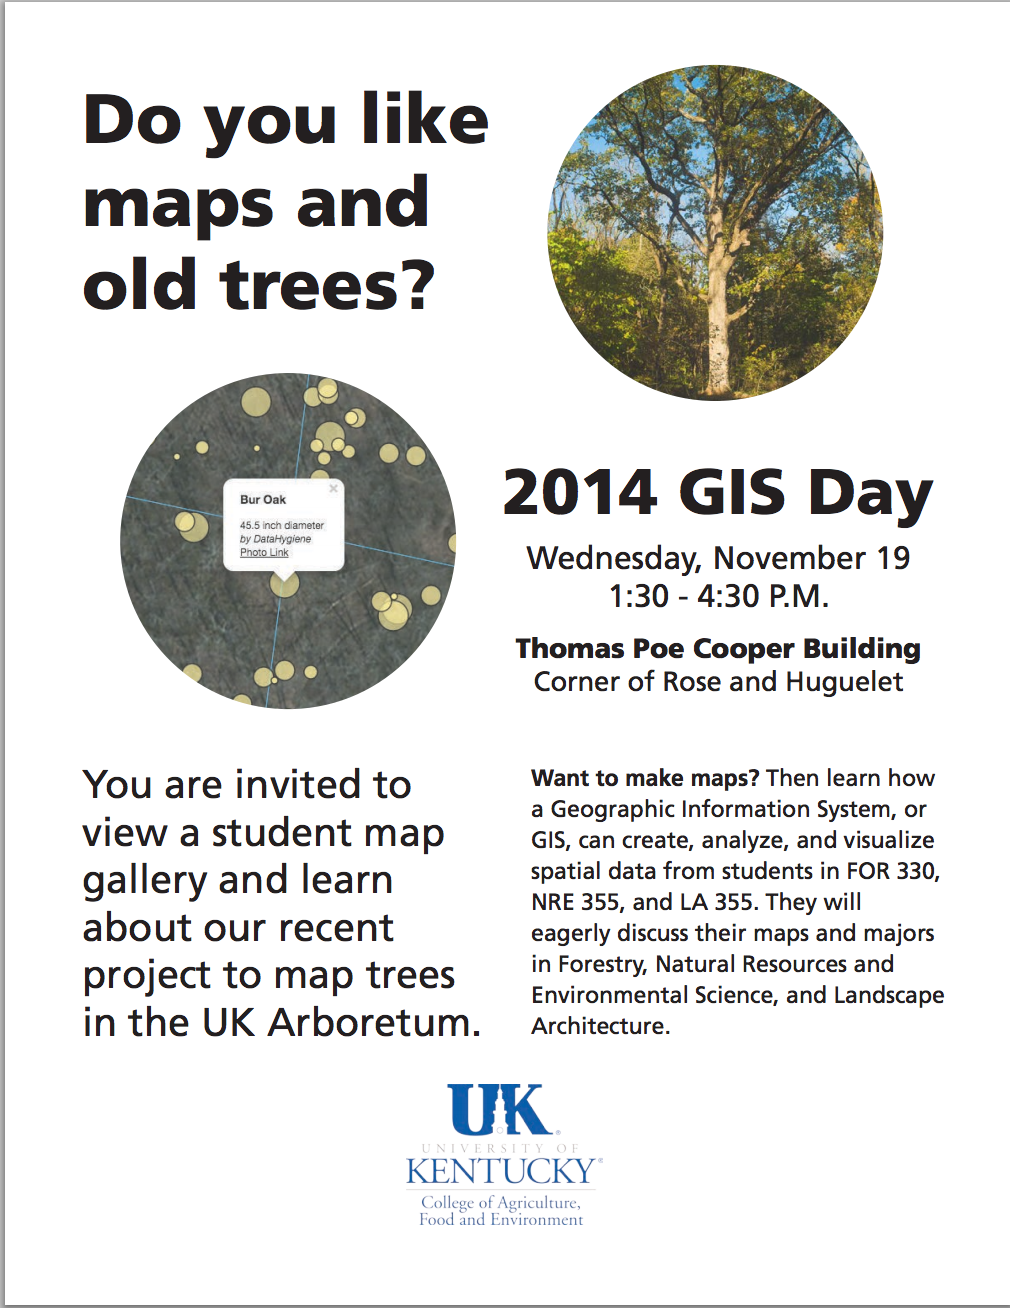 2014 GIS Day at University of Kentucky